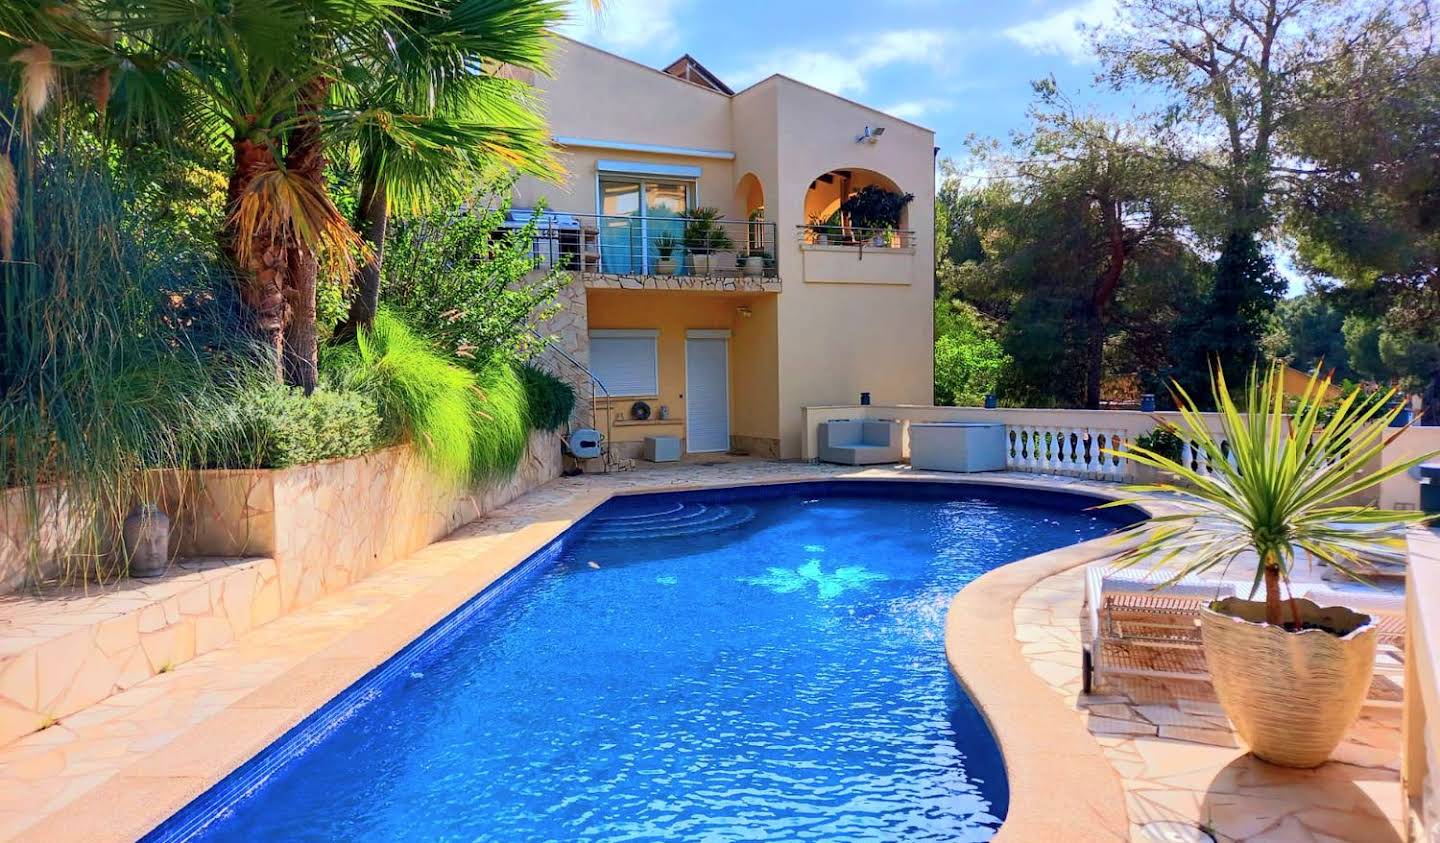 House with pool and terrace Costa de la Calma